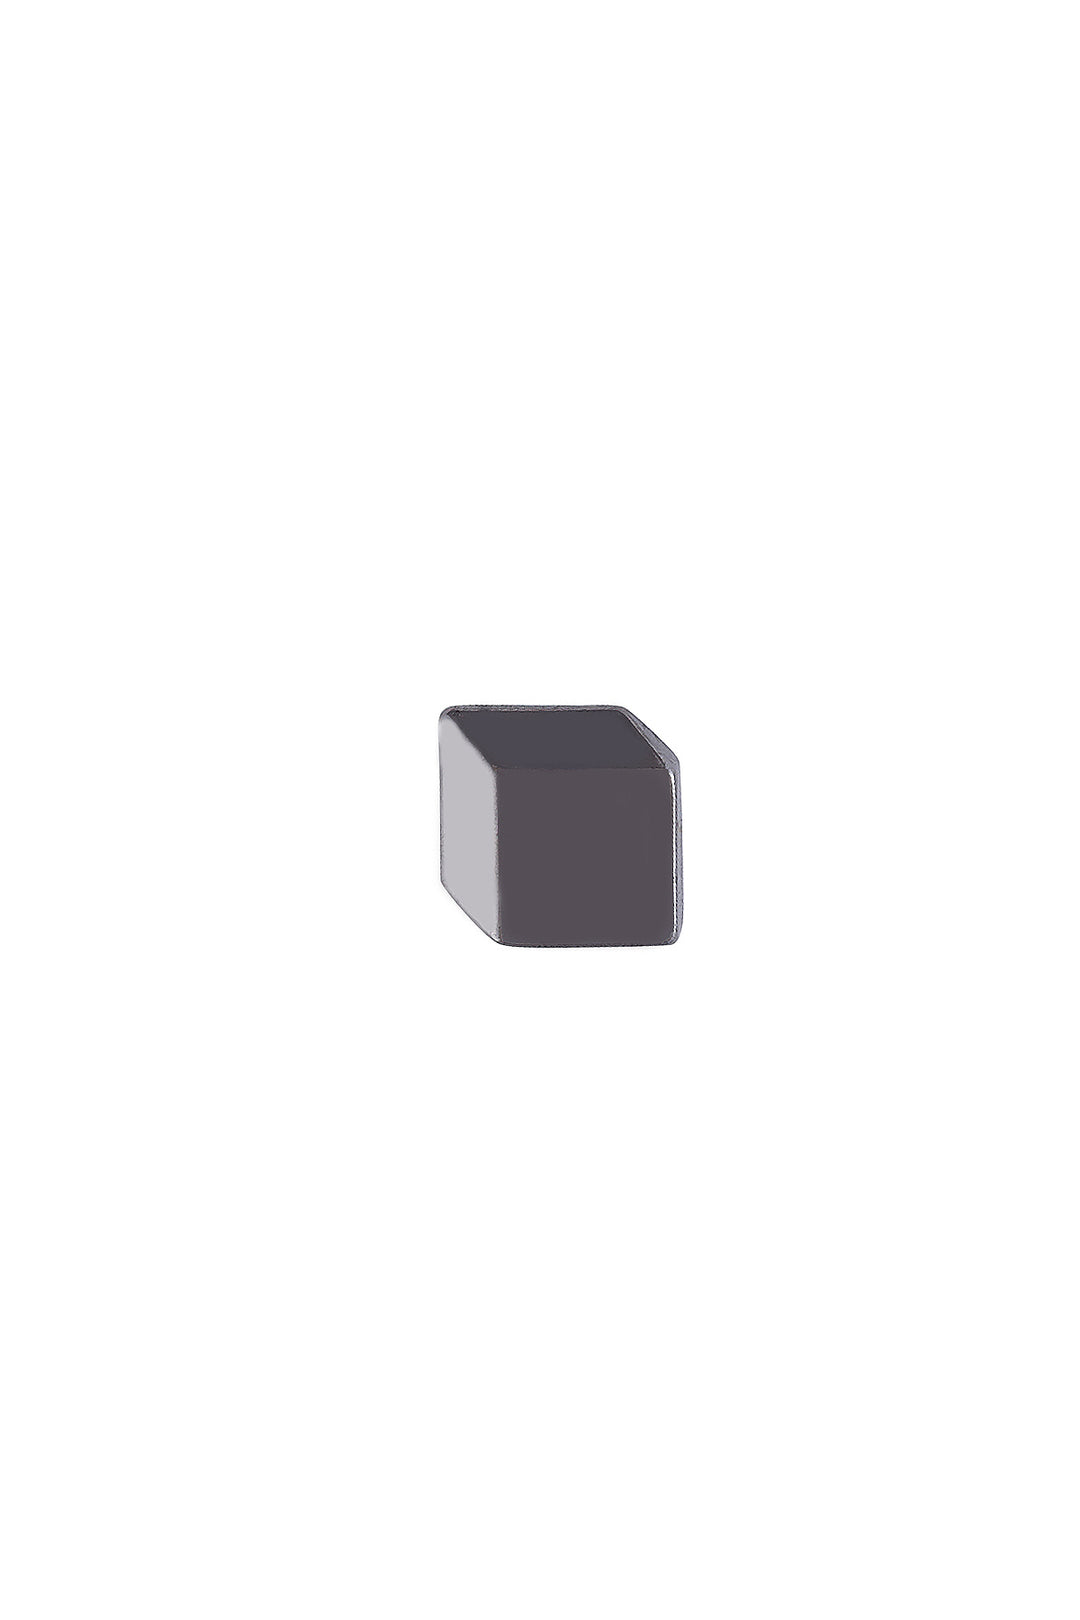 Shiny Black Nickel (Gunmetal) Cube Shape 10mm (16L) downhole party wear shirt button - Jhonea Accessories